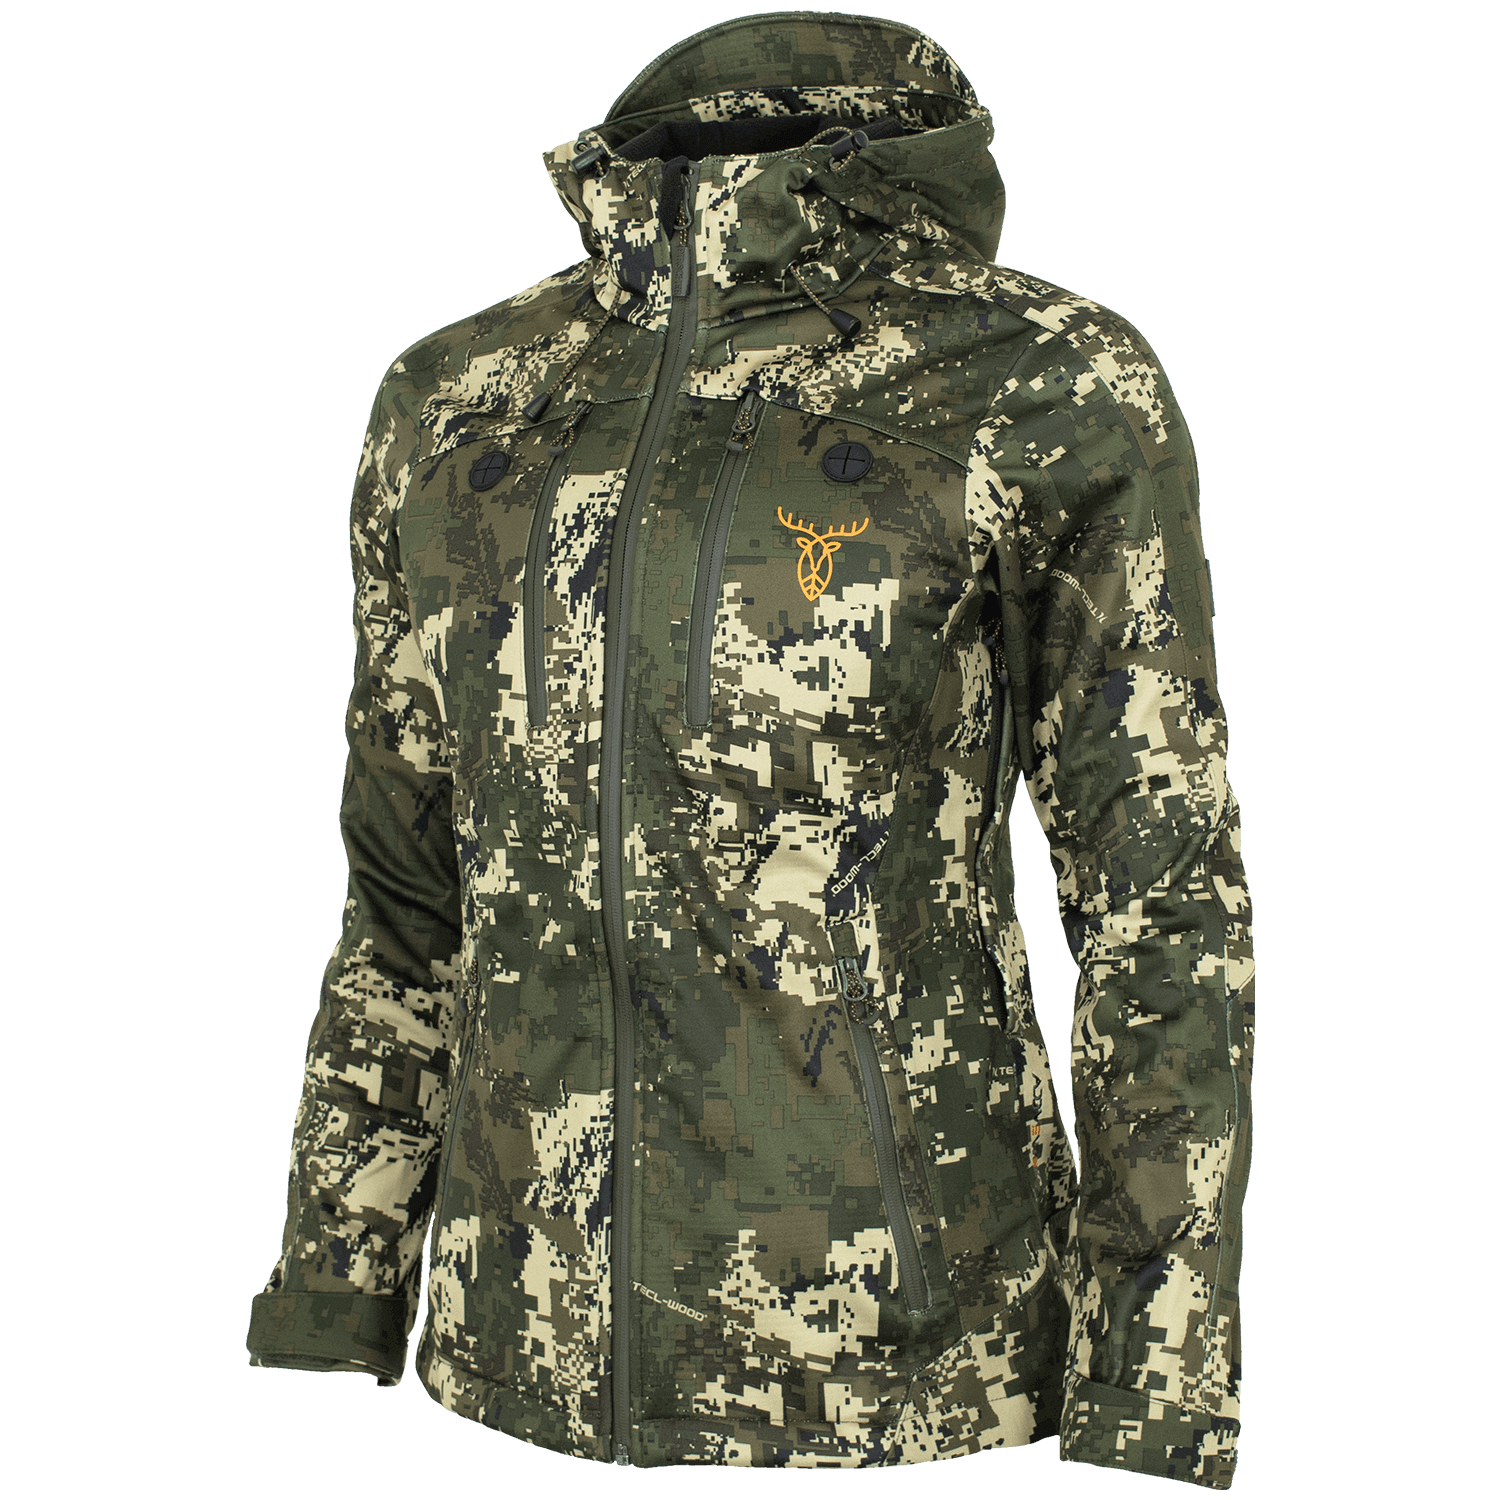 Pirscher Gear Allseason Ladies Jacket (Optimax) - Women's Hunting Clothing 